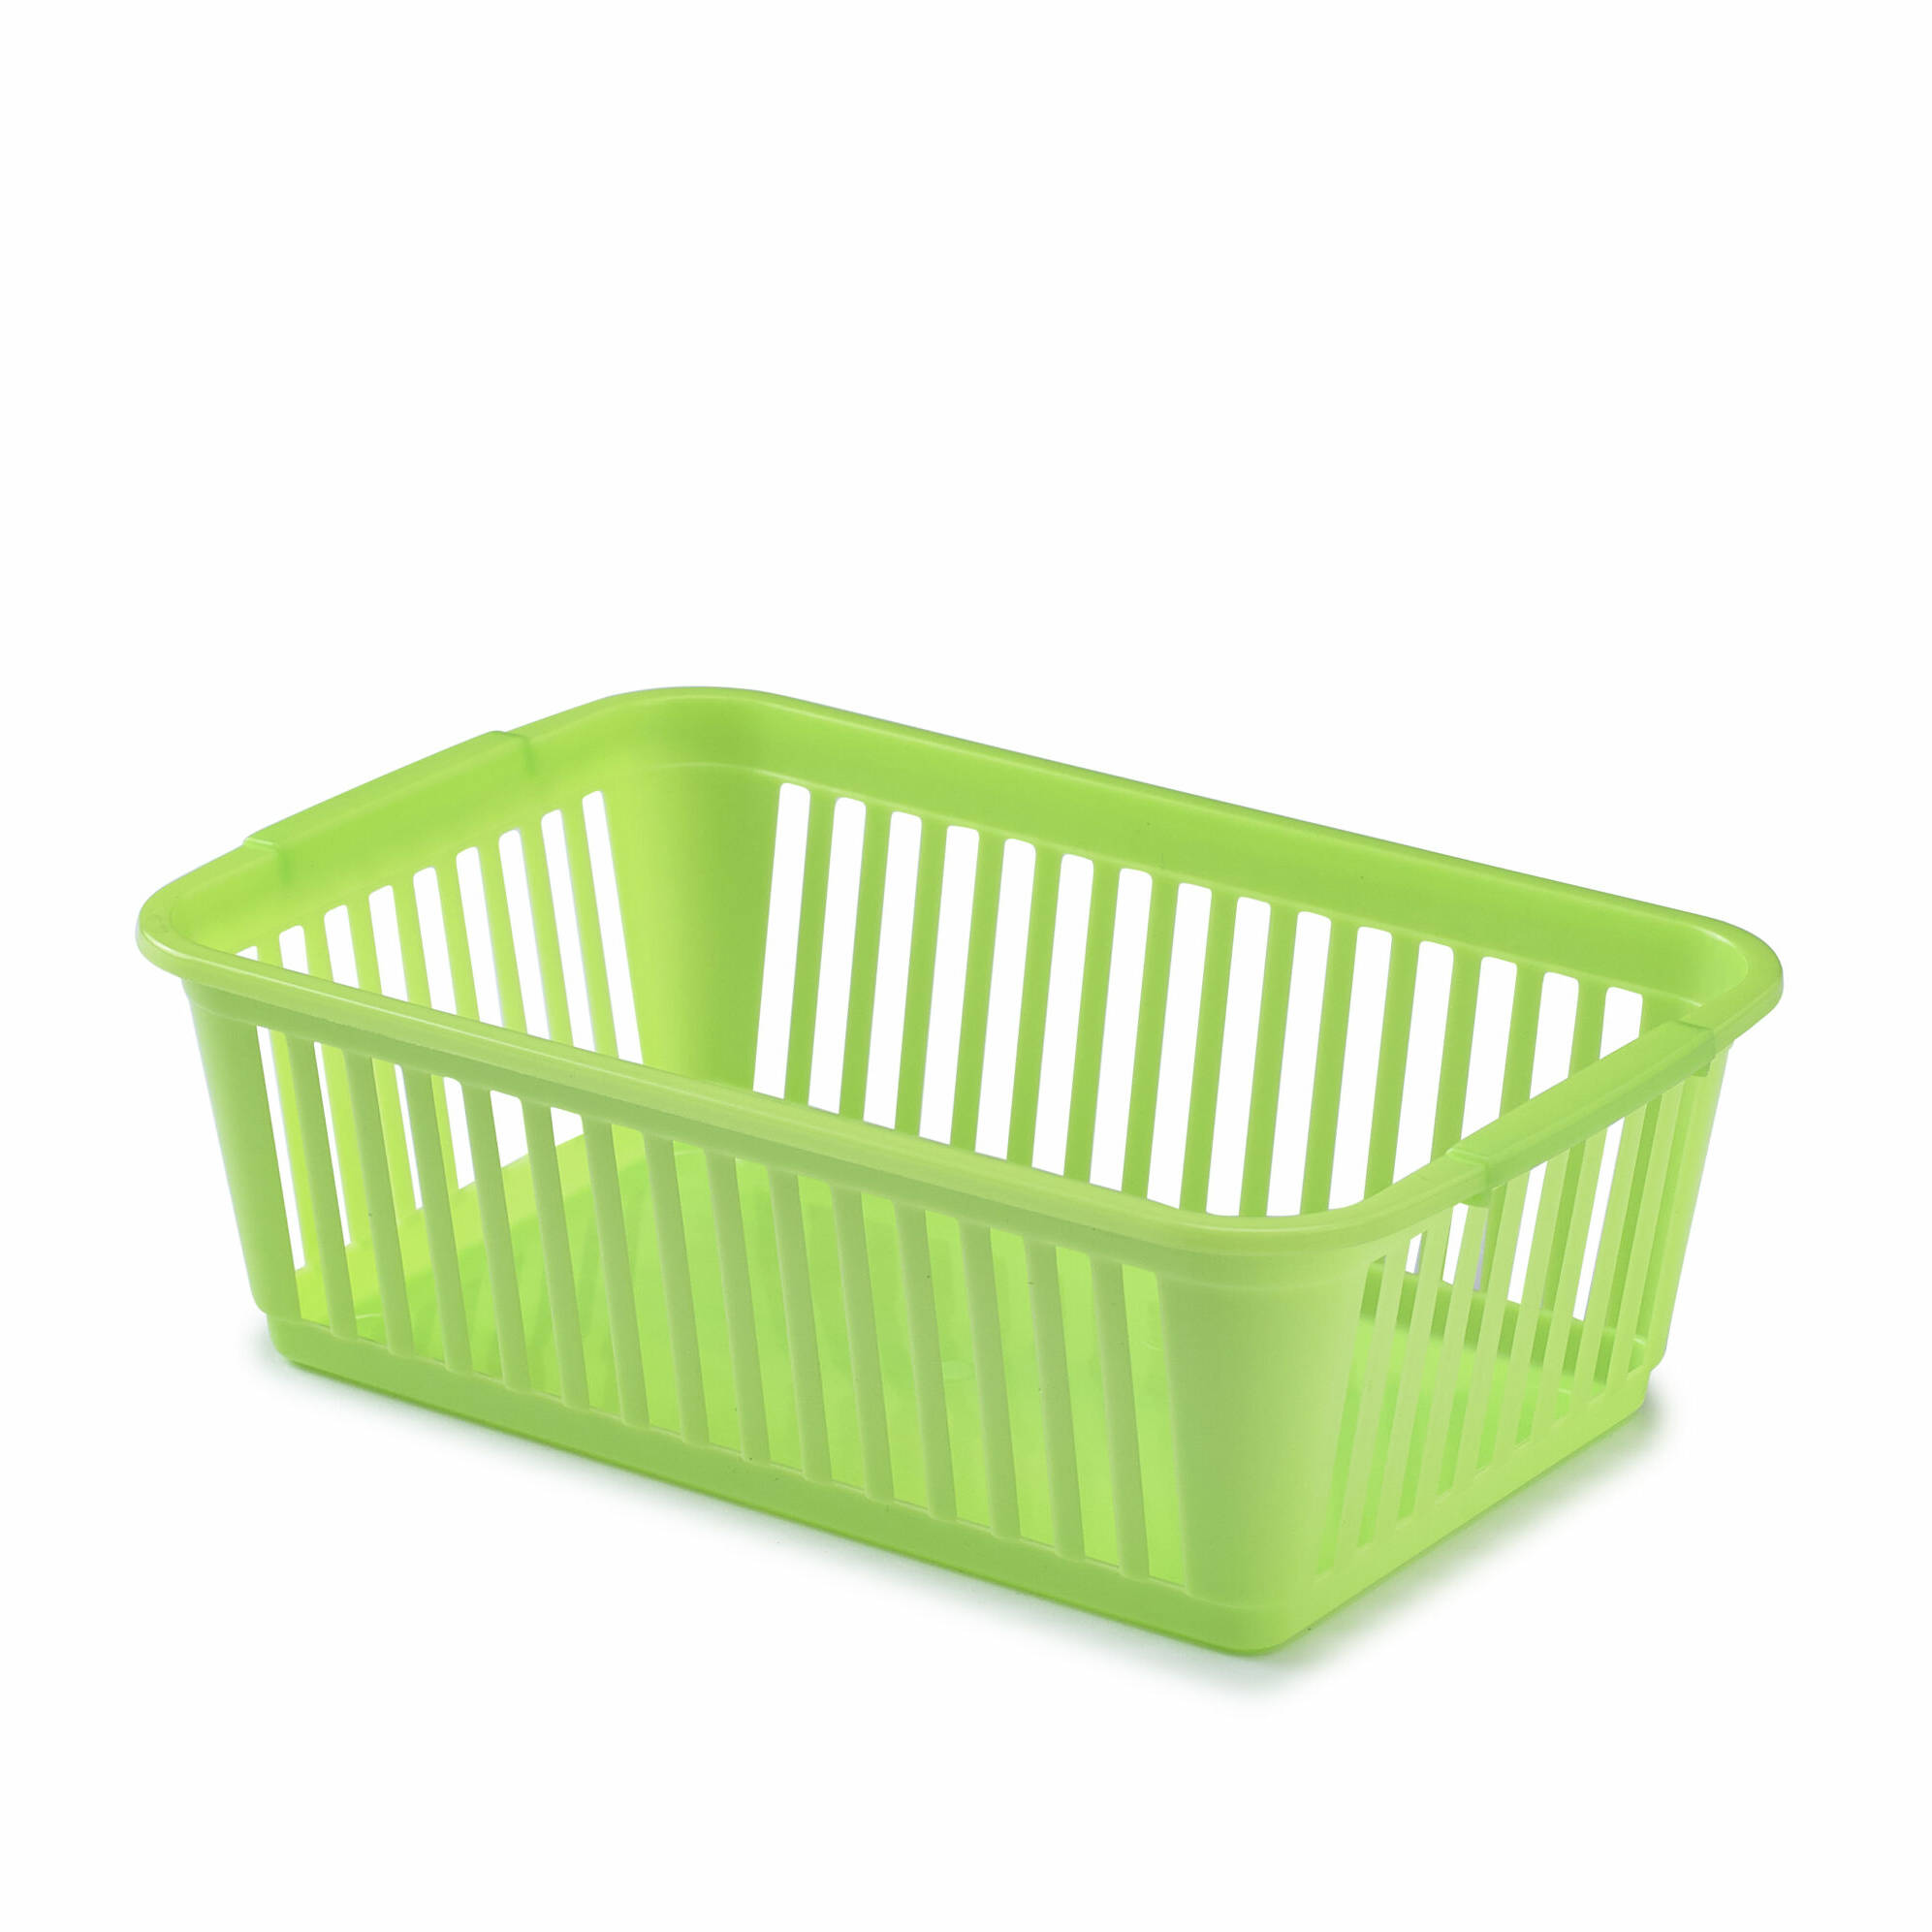 Whitefurze 25Cm Handy Basket Lime Green